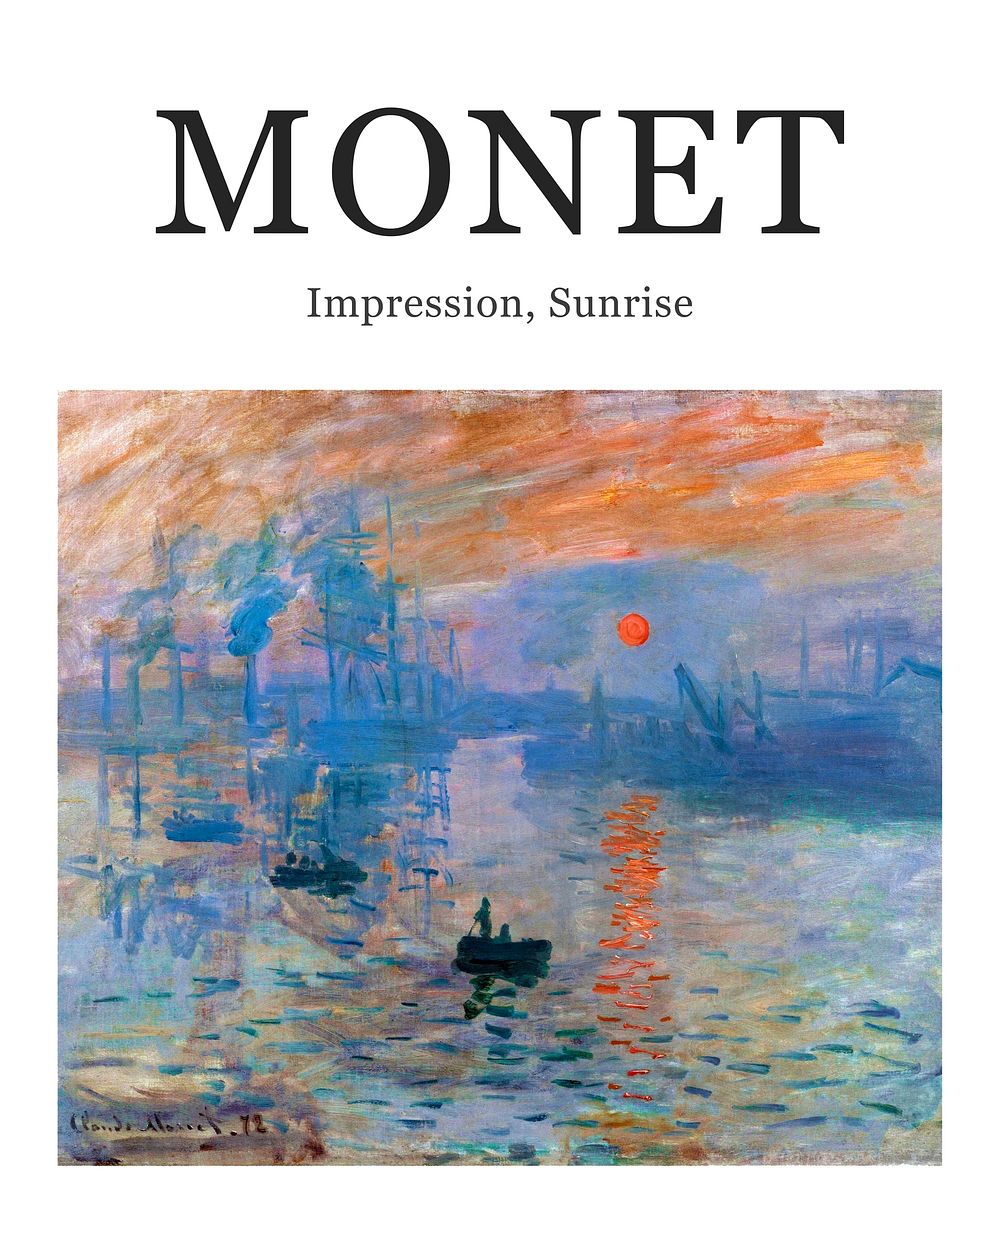 Claude Monet poster, famous painting Impression, Sunrise wall decor